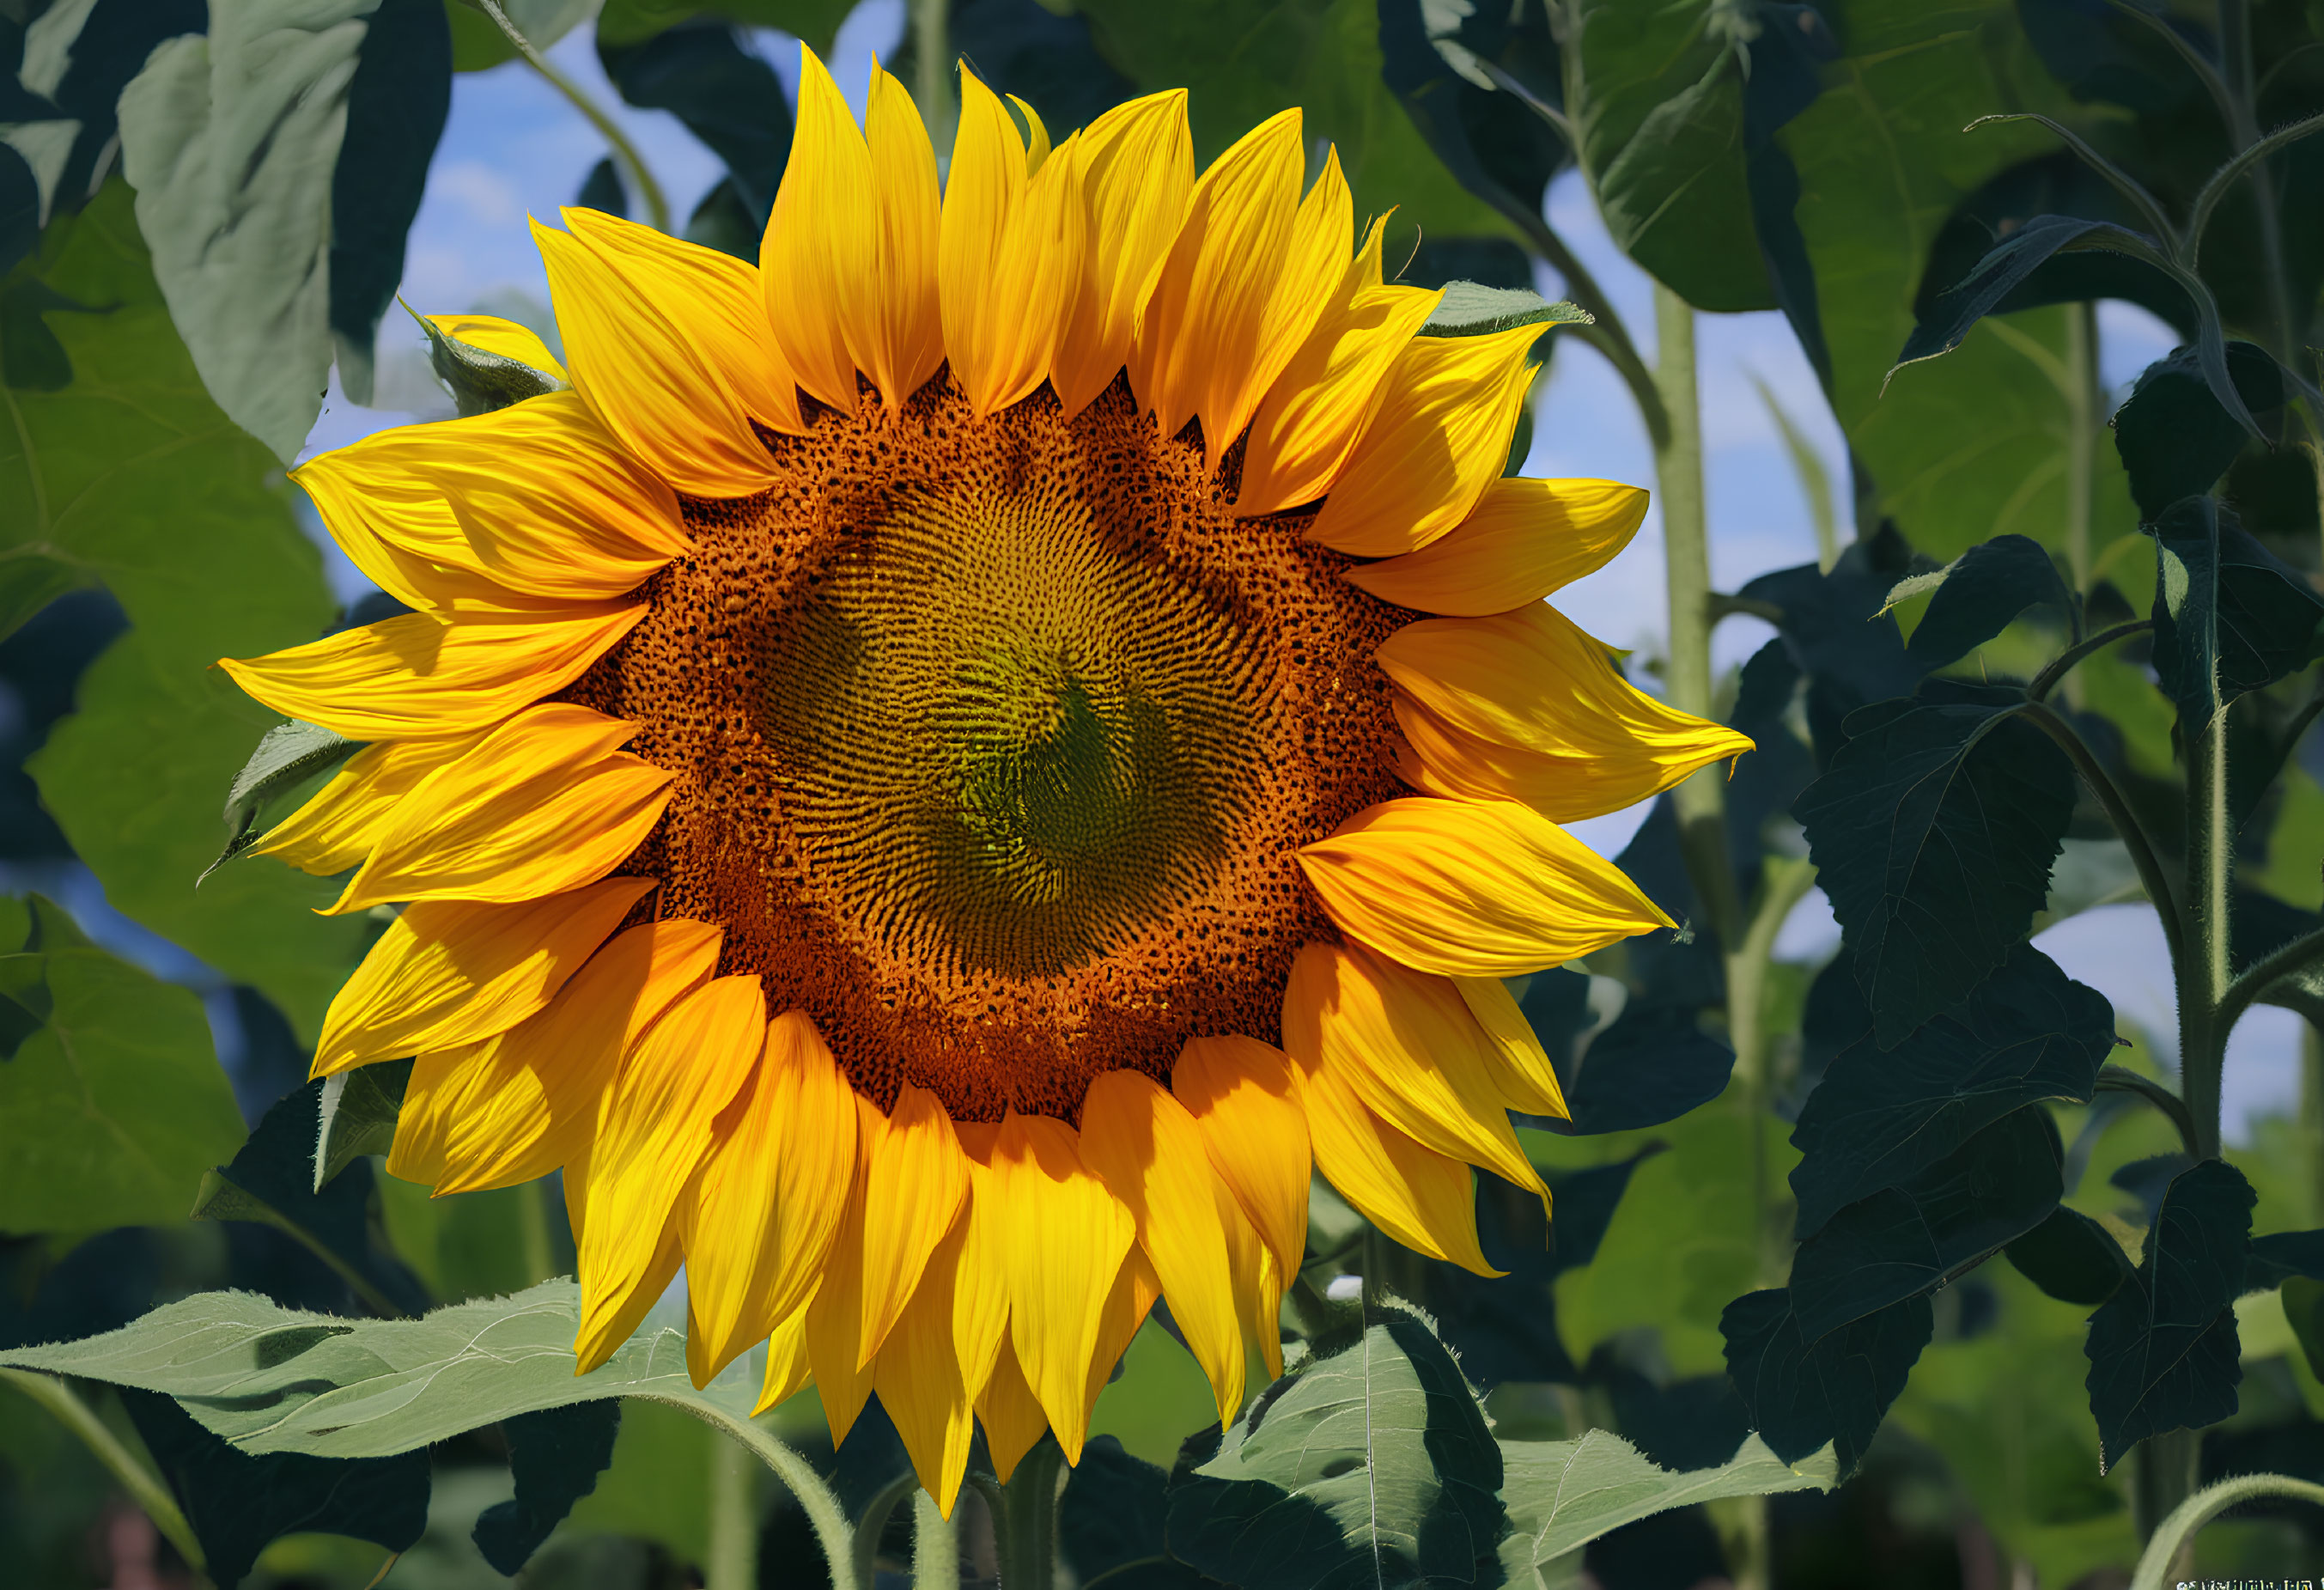 Bright Yellow Sunflower in Full Bloom Against Blue Sky